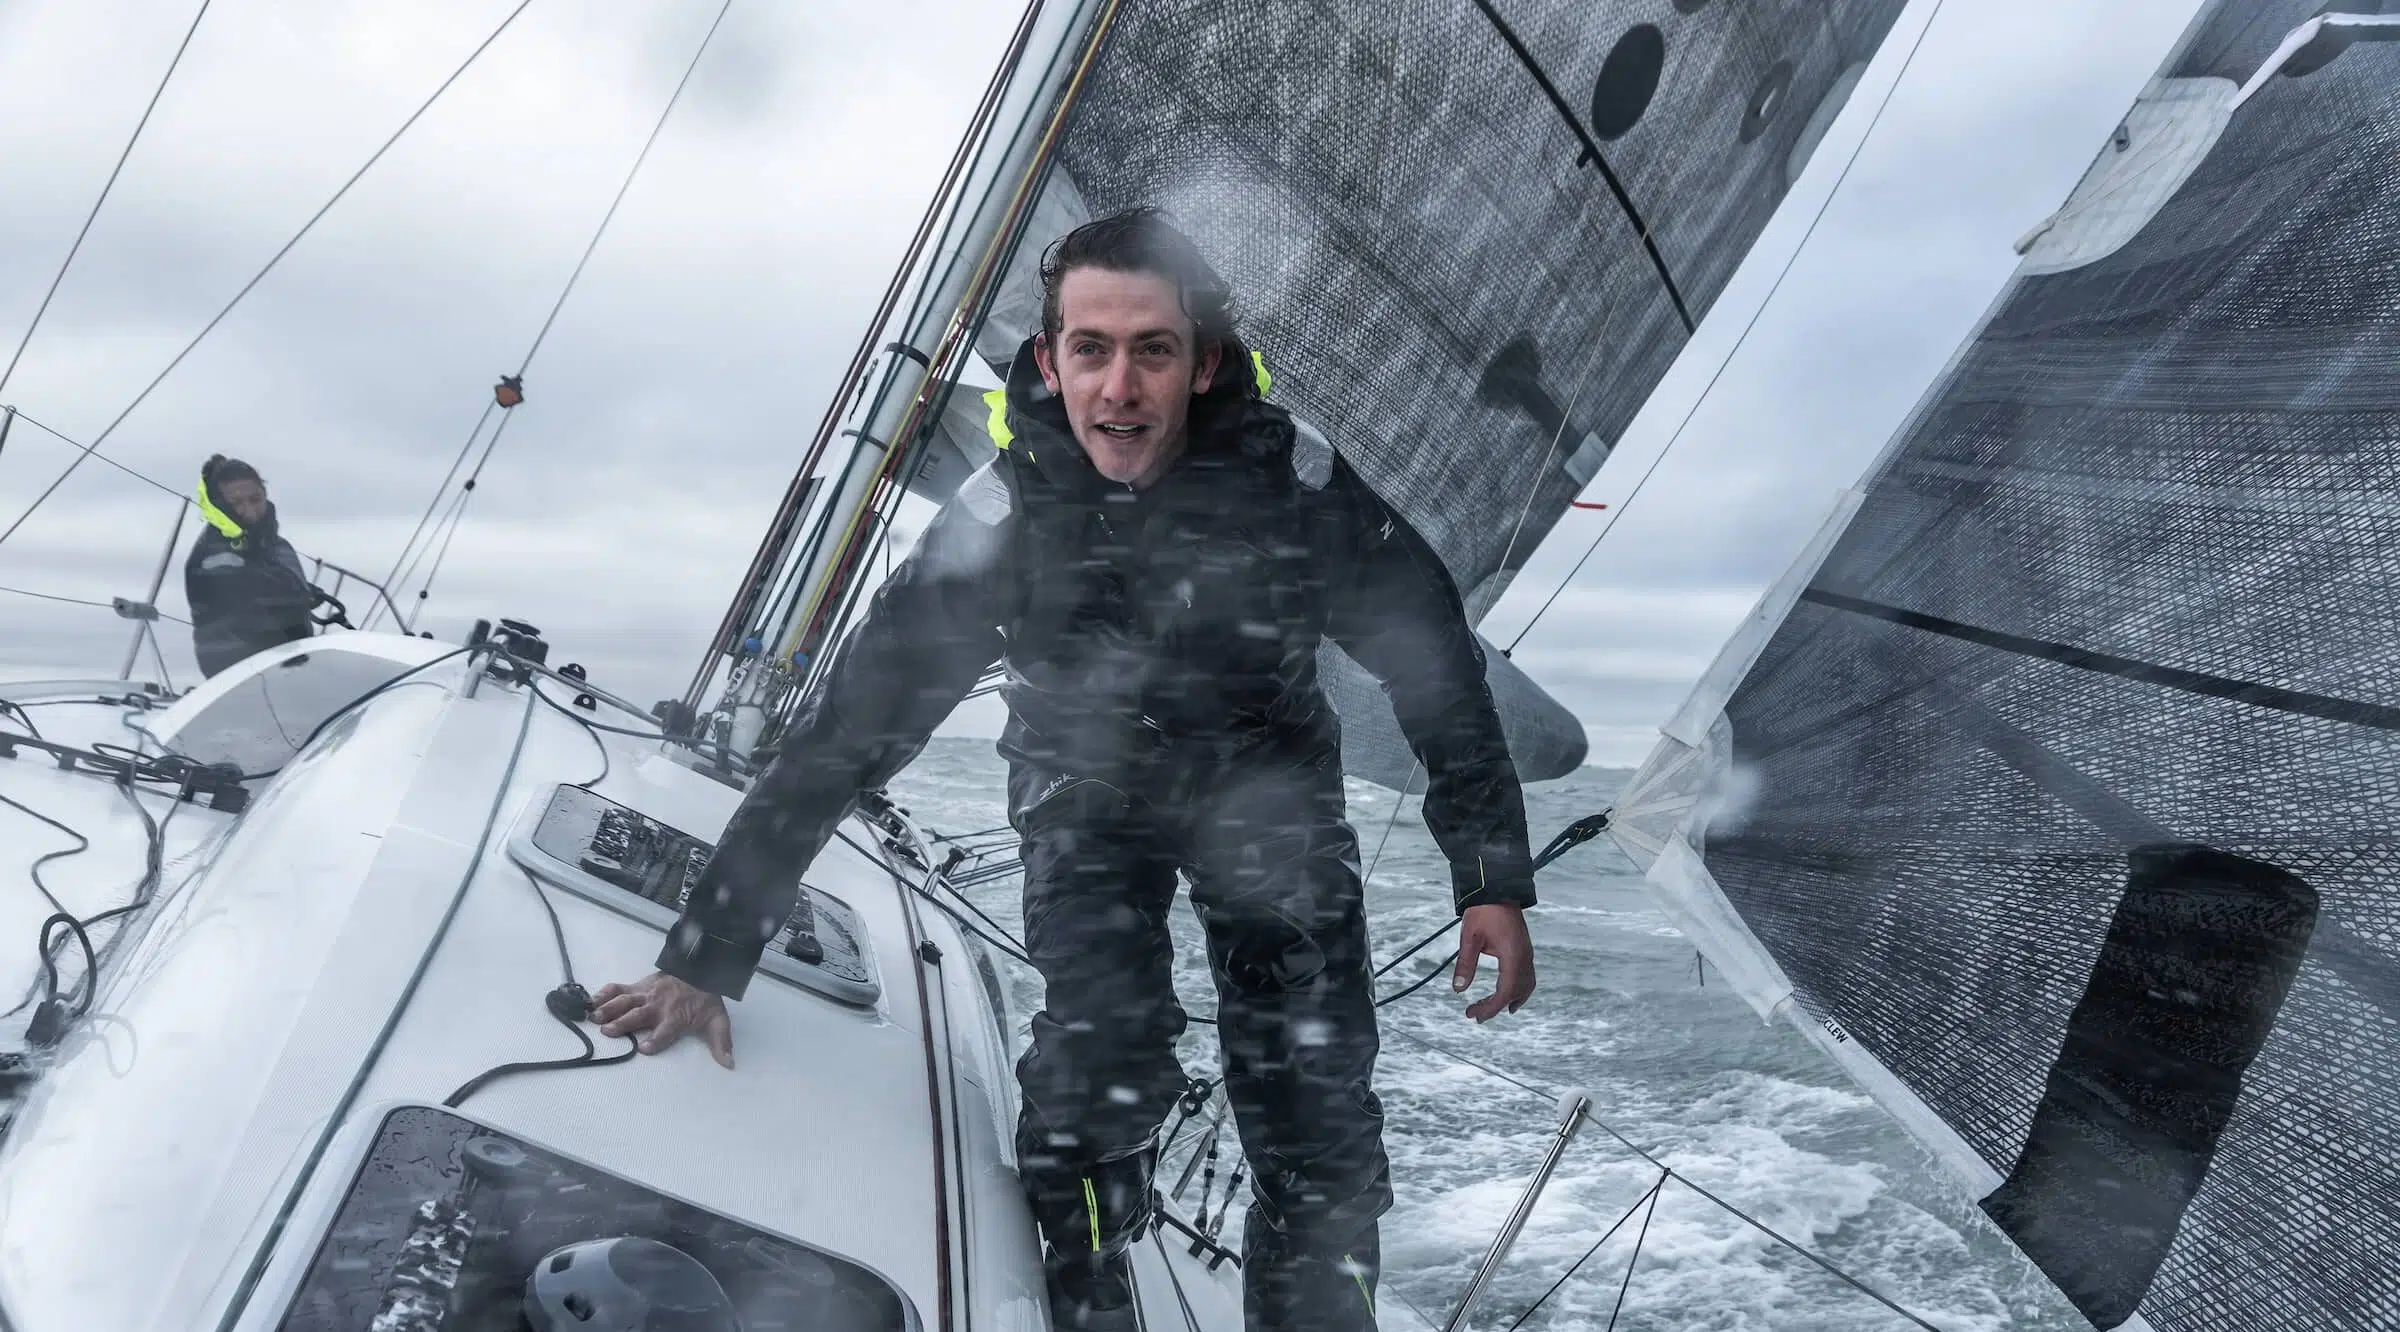 Young british sailor james harayda aiming to break records at prestigious vendée globe